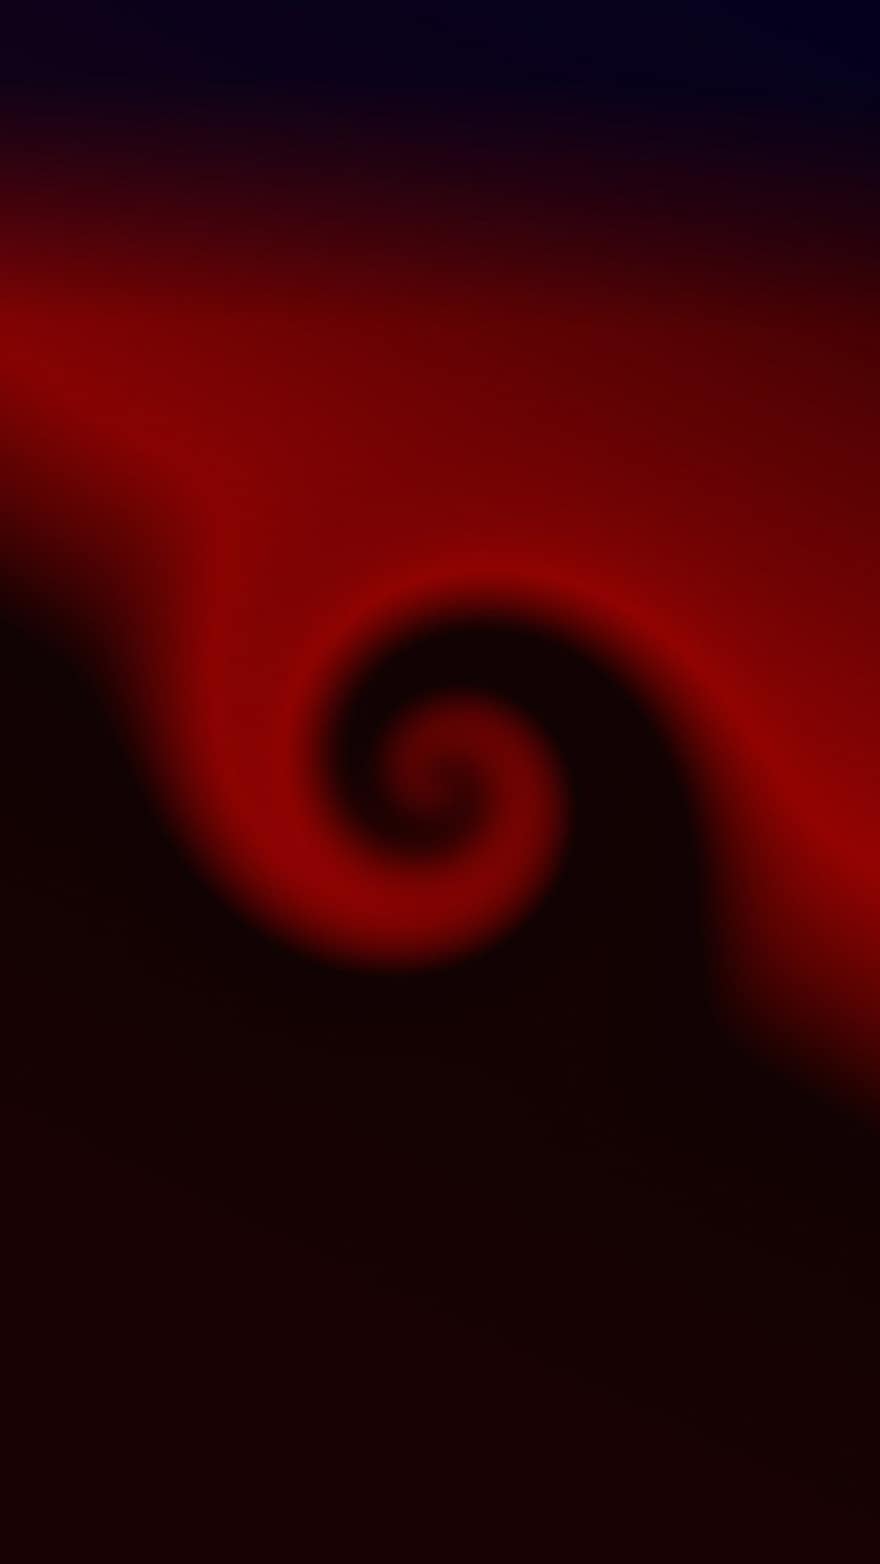 espiral, fundo, Preto, vermelho, abstrato